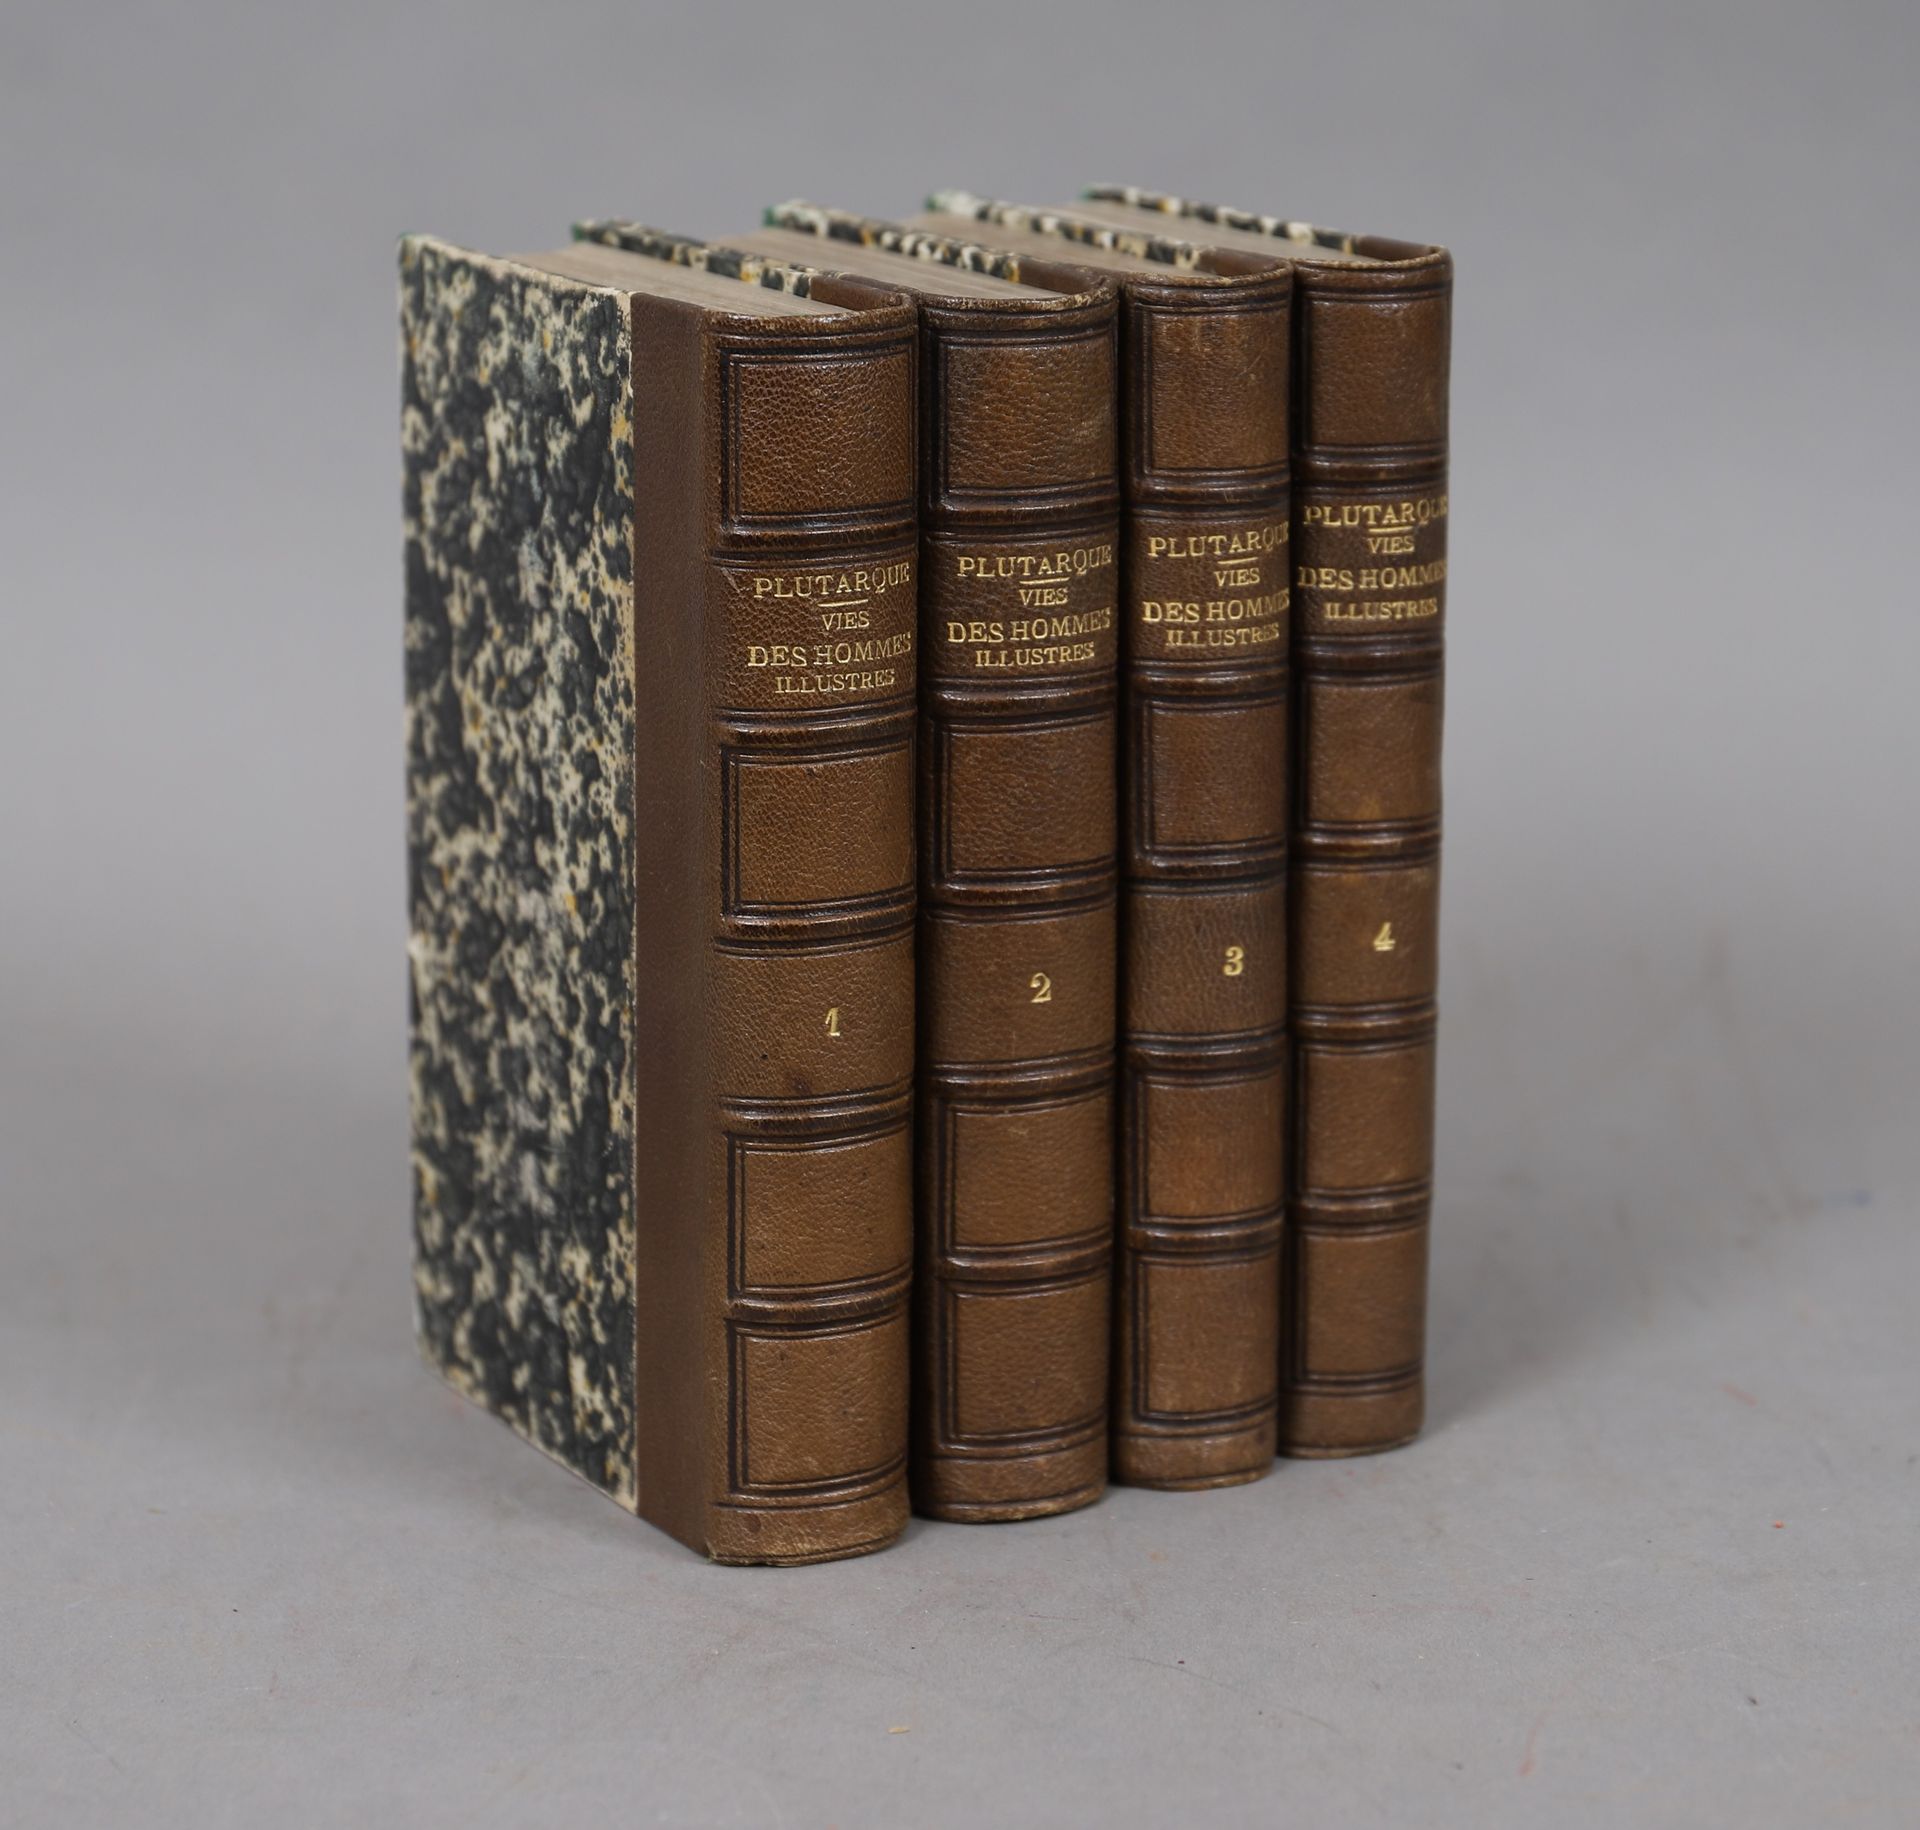 Null PLUTARCH - LIFE OF ILLUSTRAL MEN

4 bound volumes.

1861